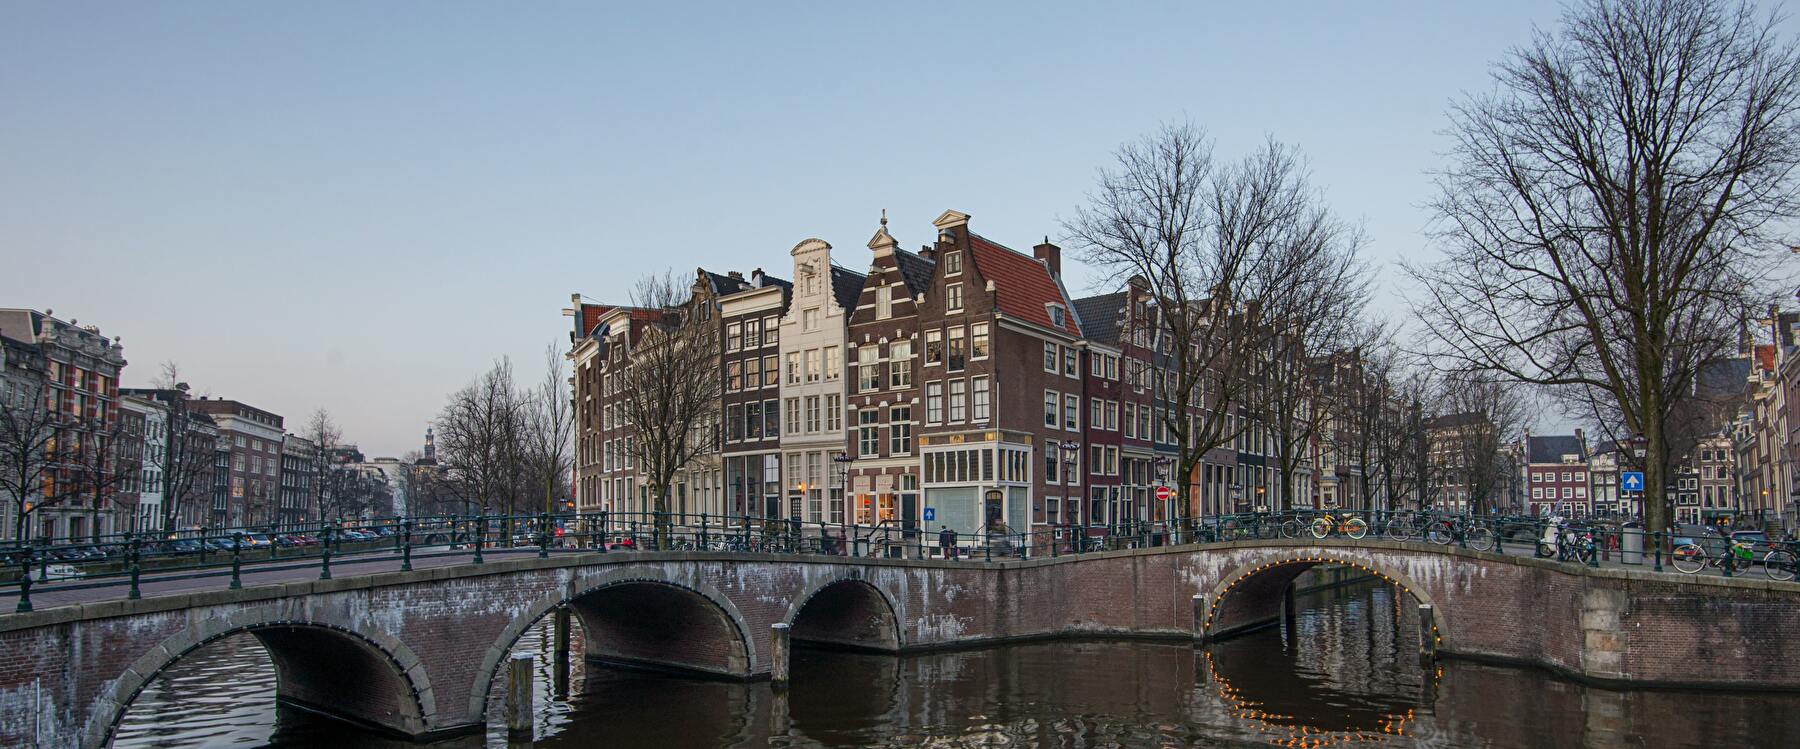 winter shot of the amsterdam canal belt